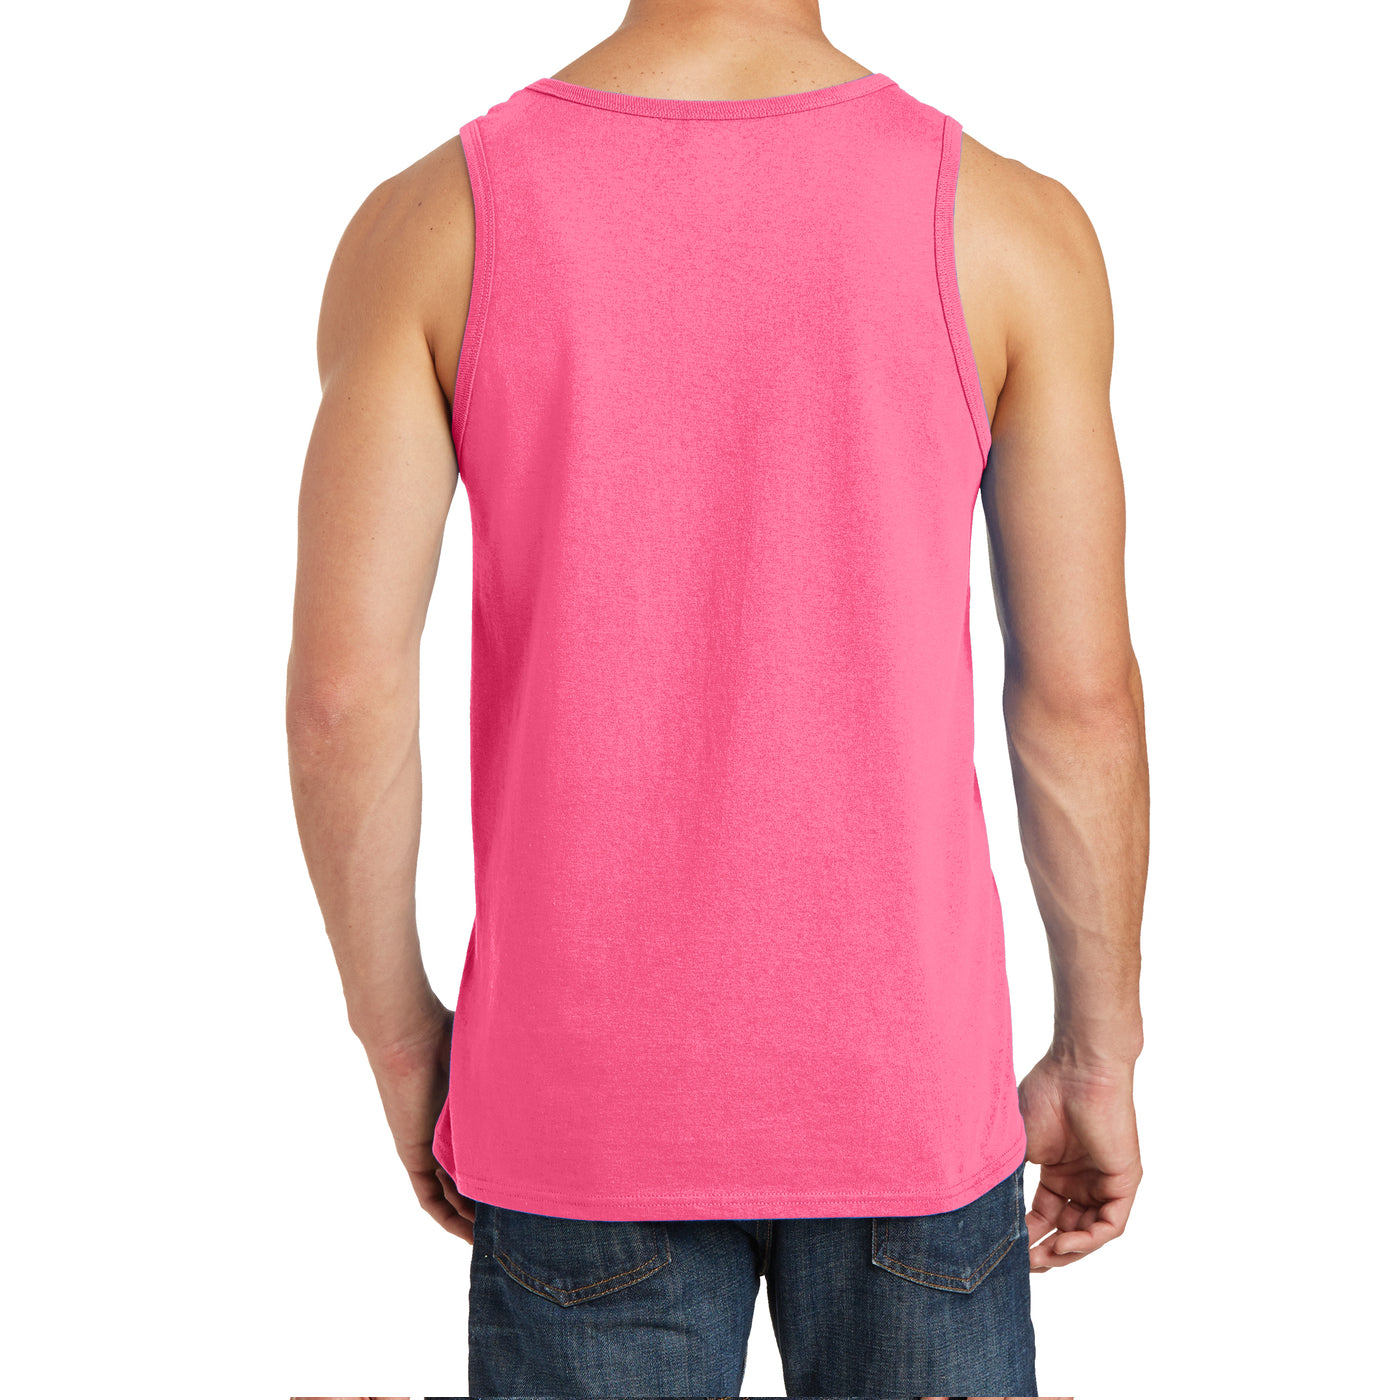 Men's Core Cotton Tank Top - Neon Pink - Back